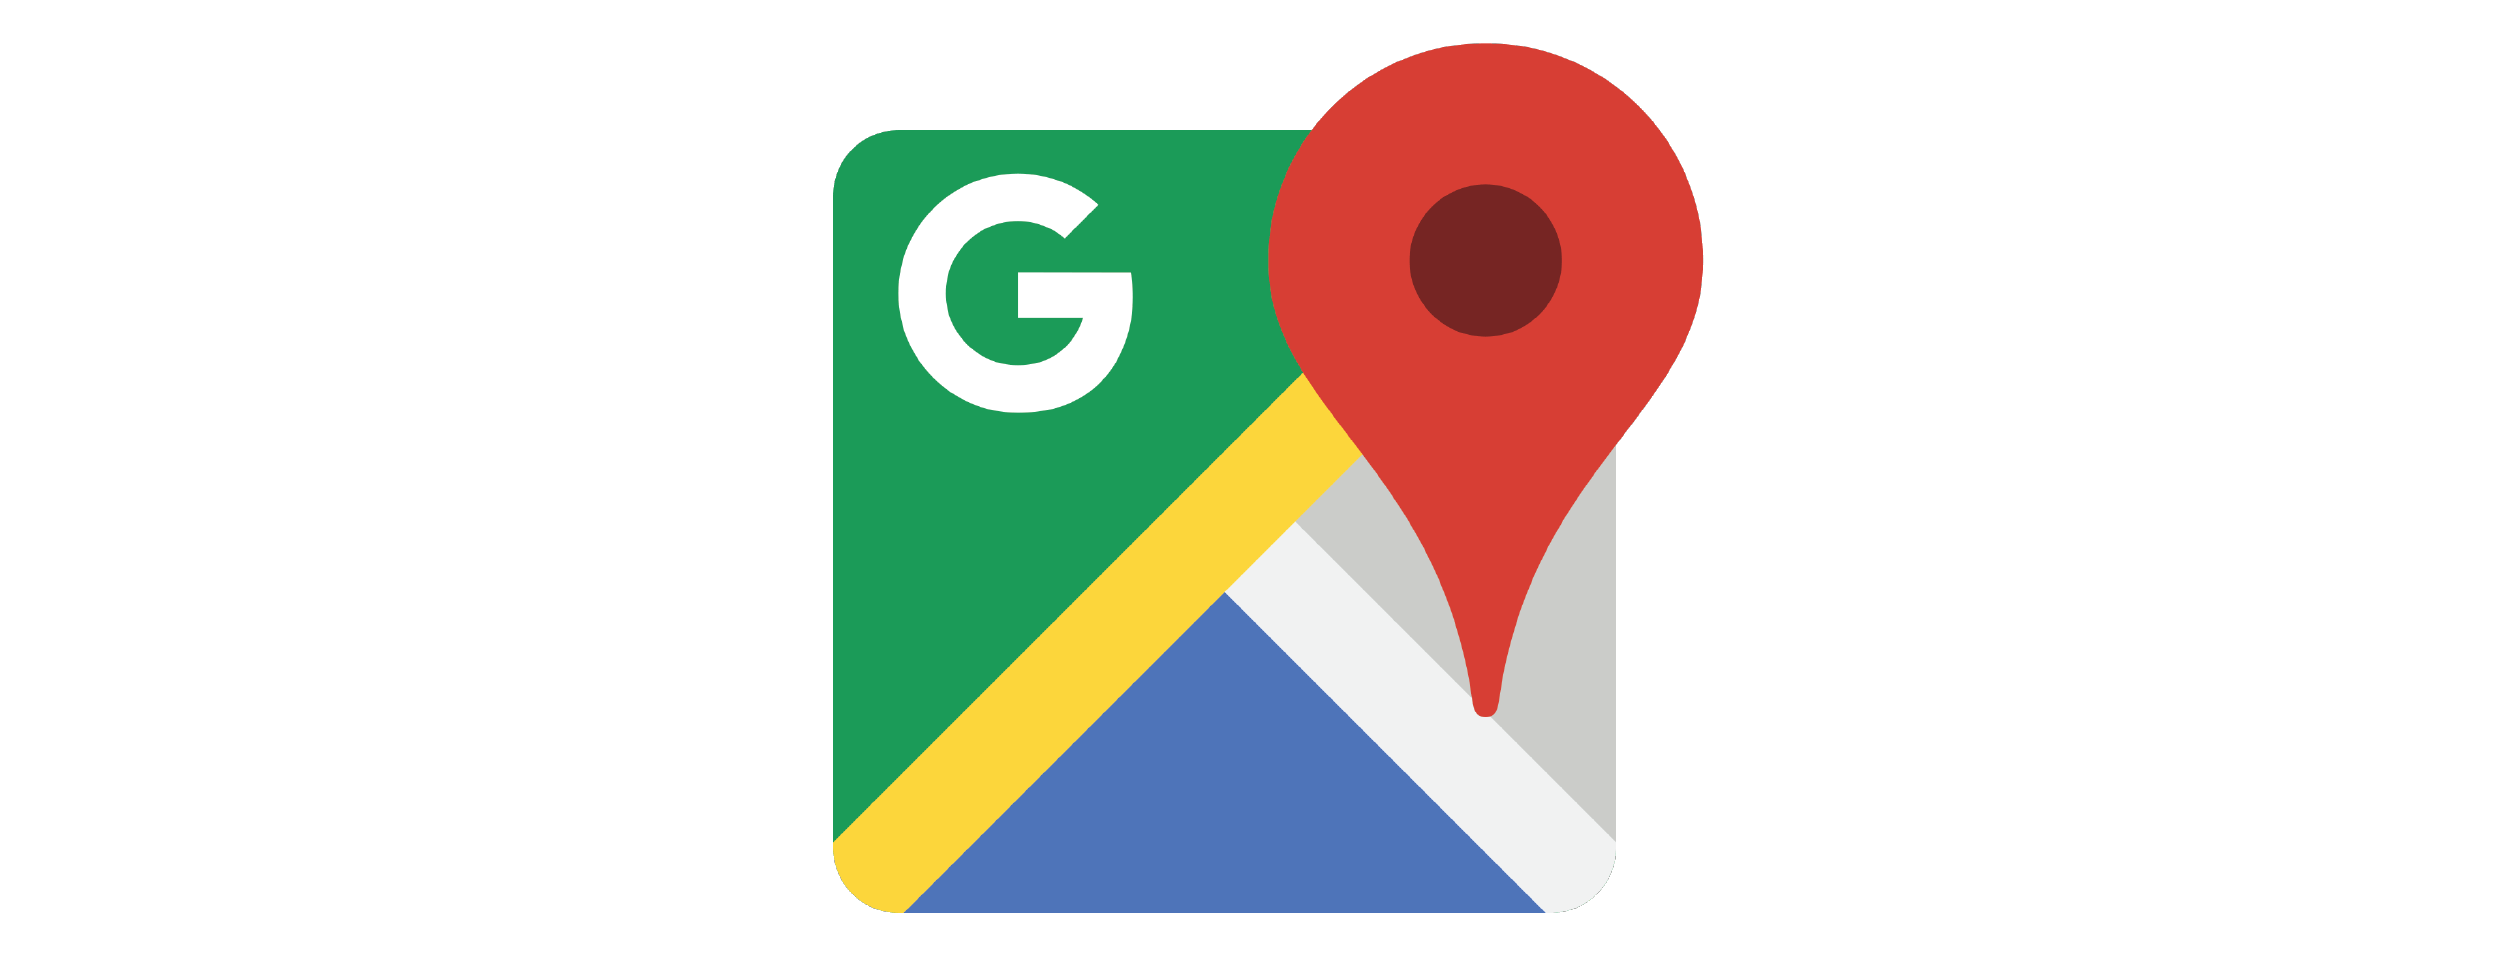 Google Maps Logo - Google Maps Logo 01